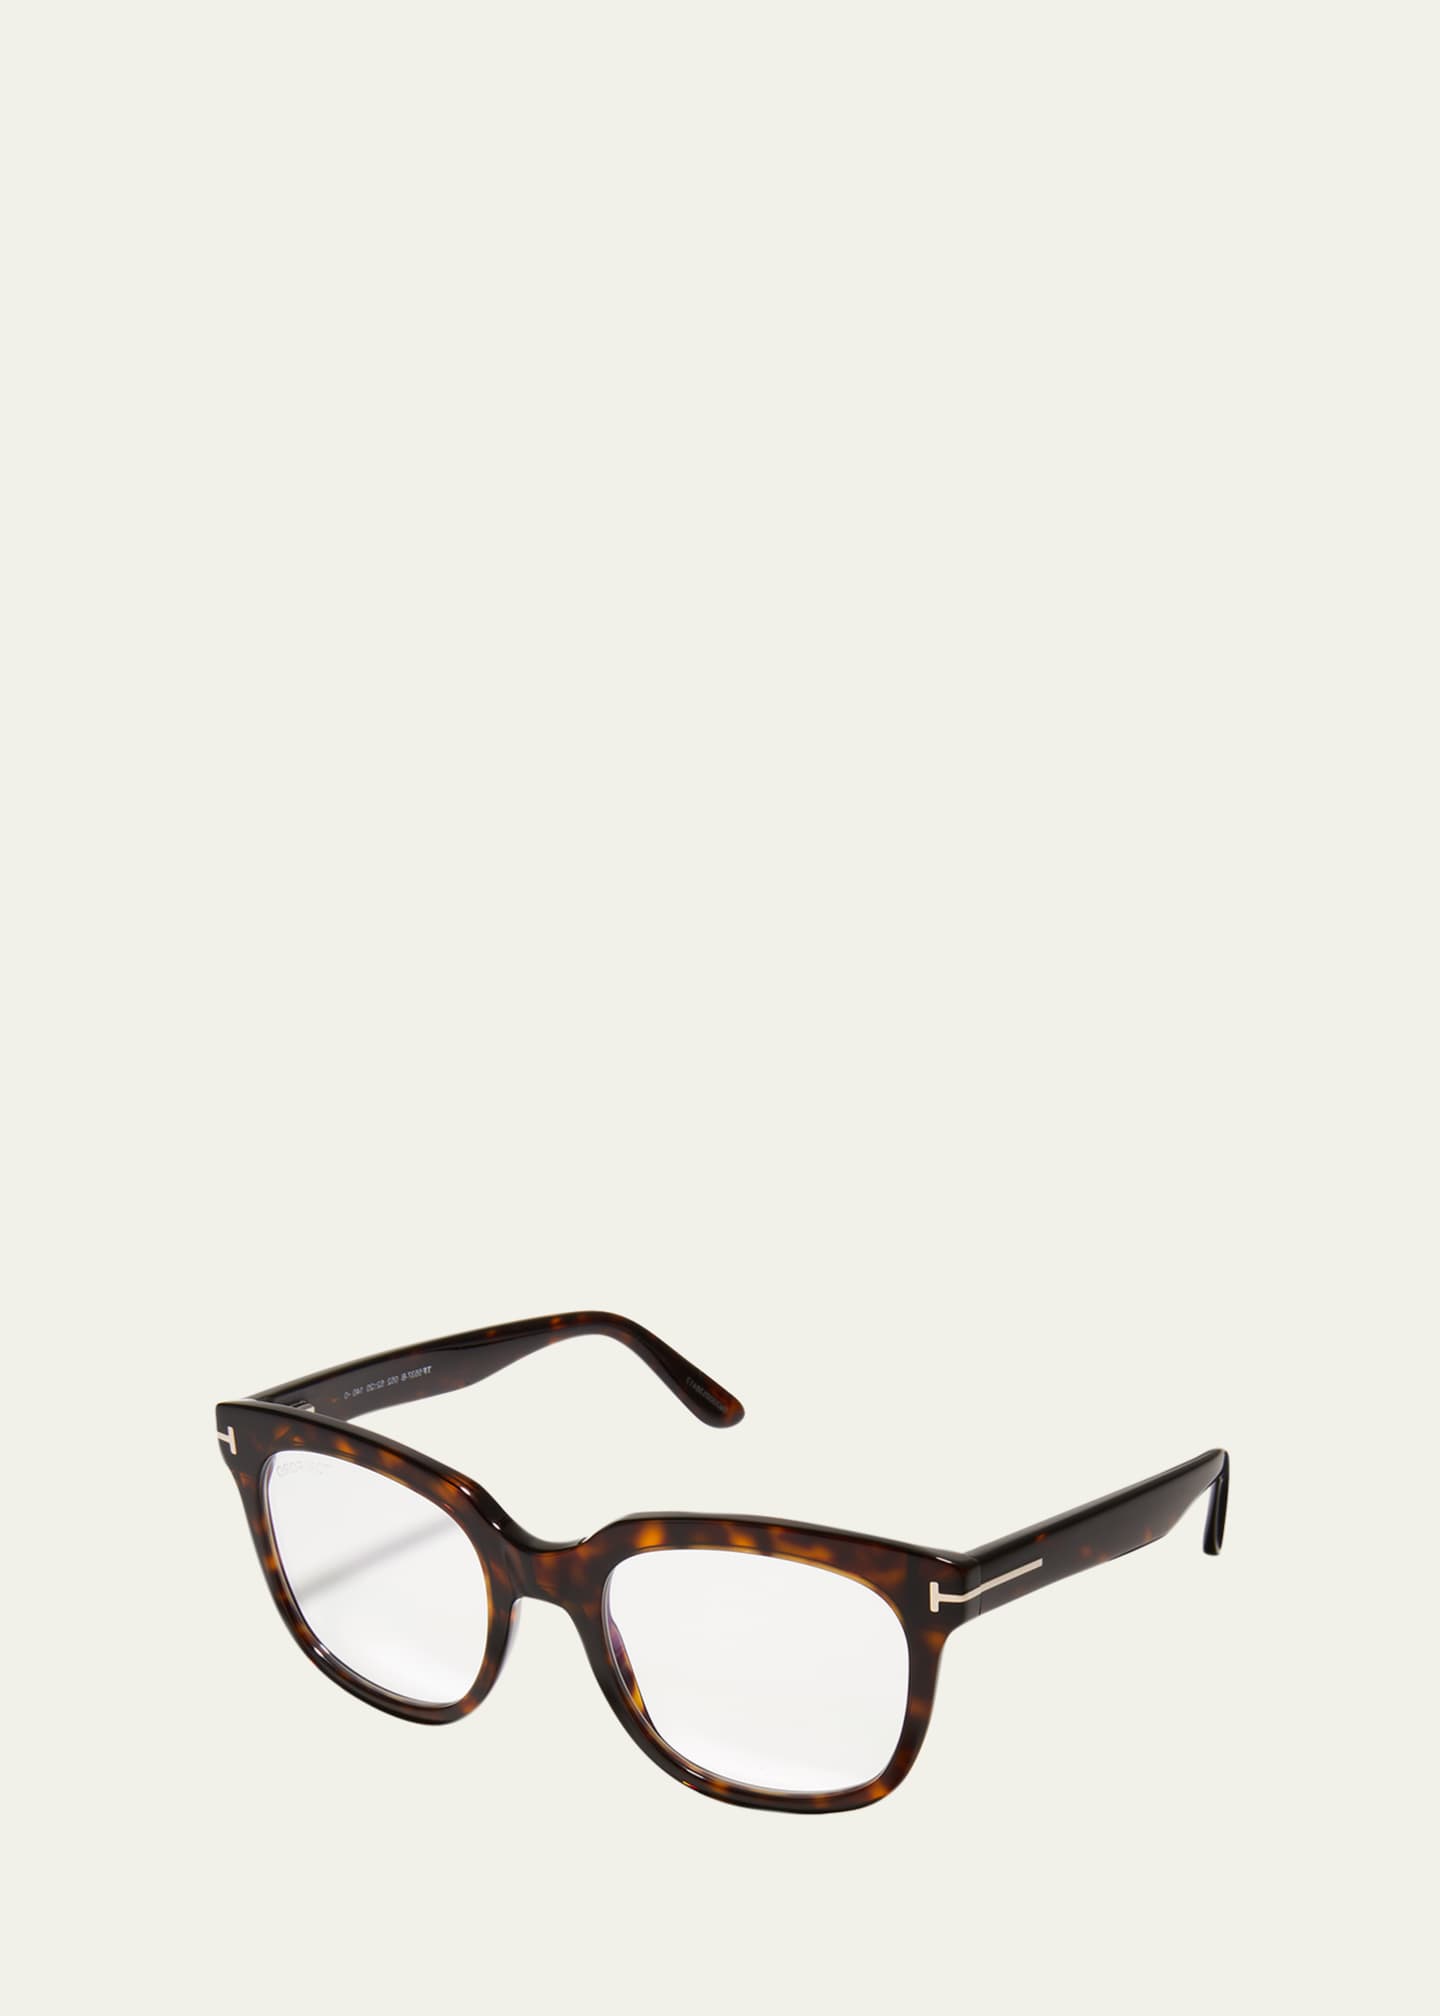 Tom Ford Translucent Square Acetate Frame Sunglasses Men